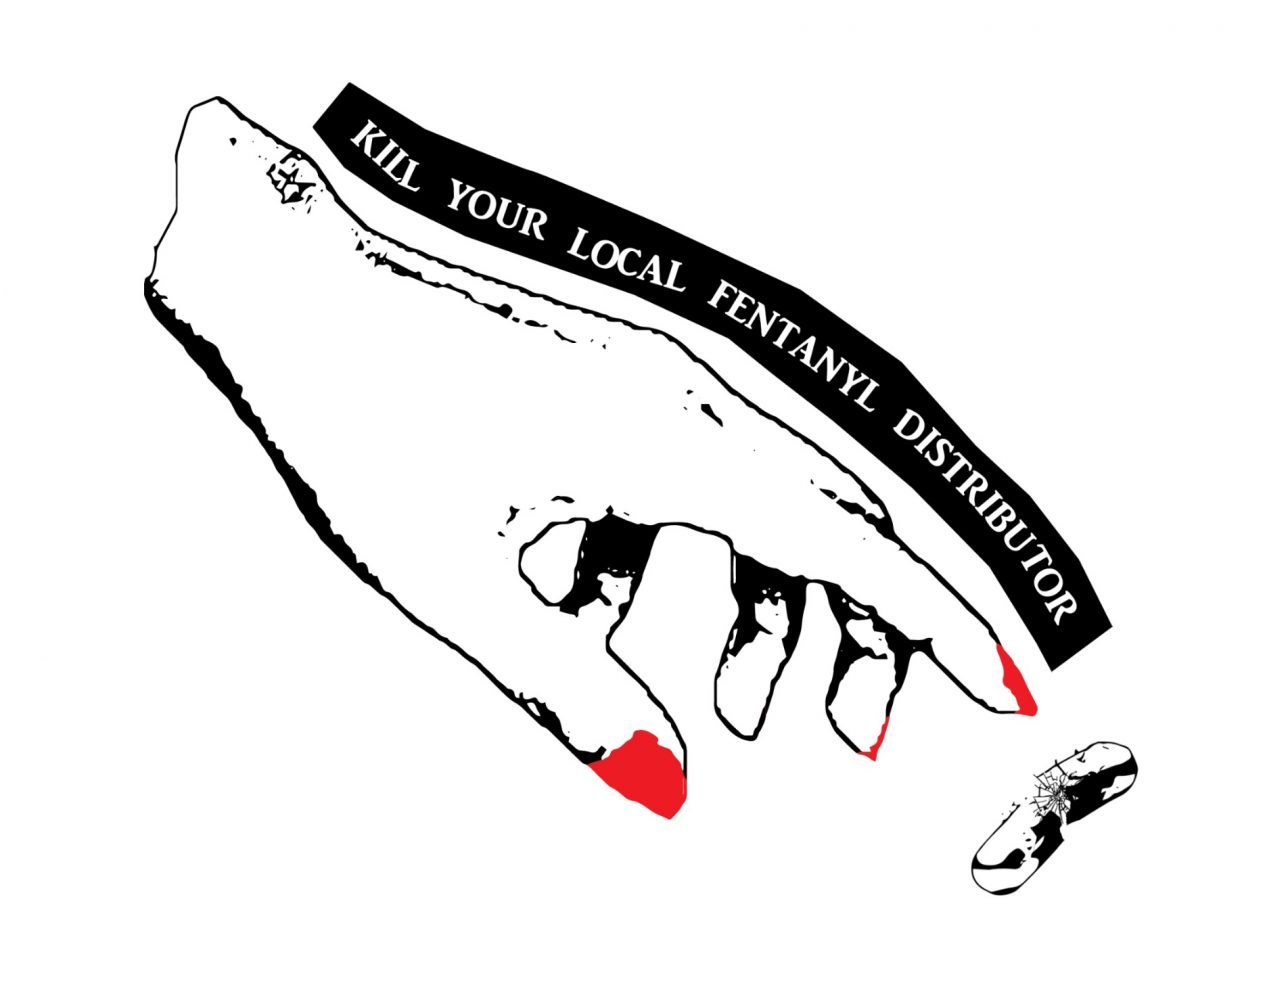 Kill you local fentanyl distributor logo